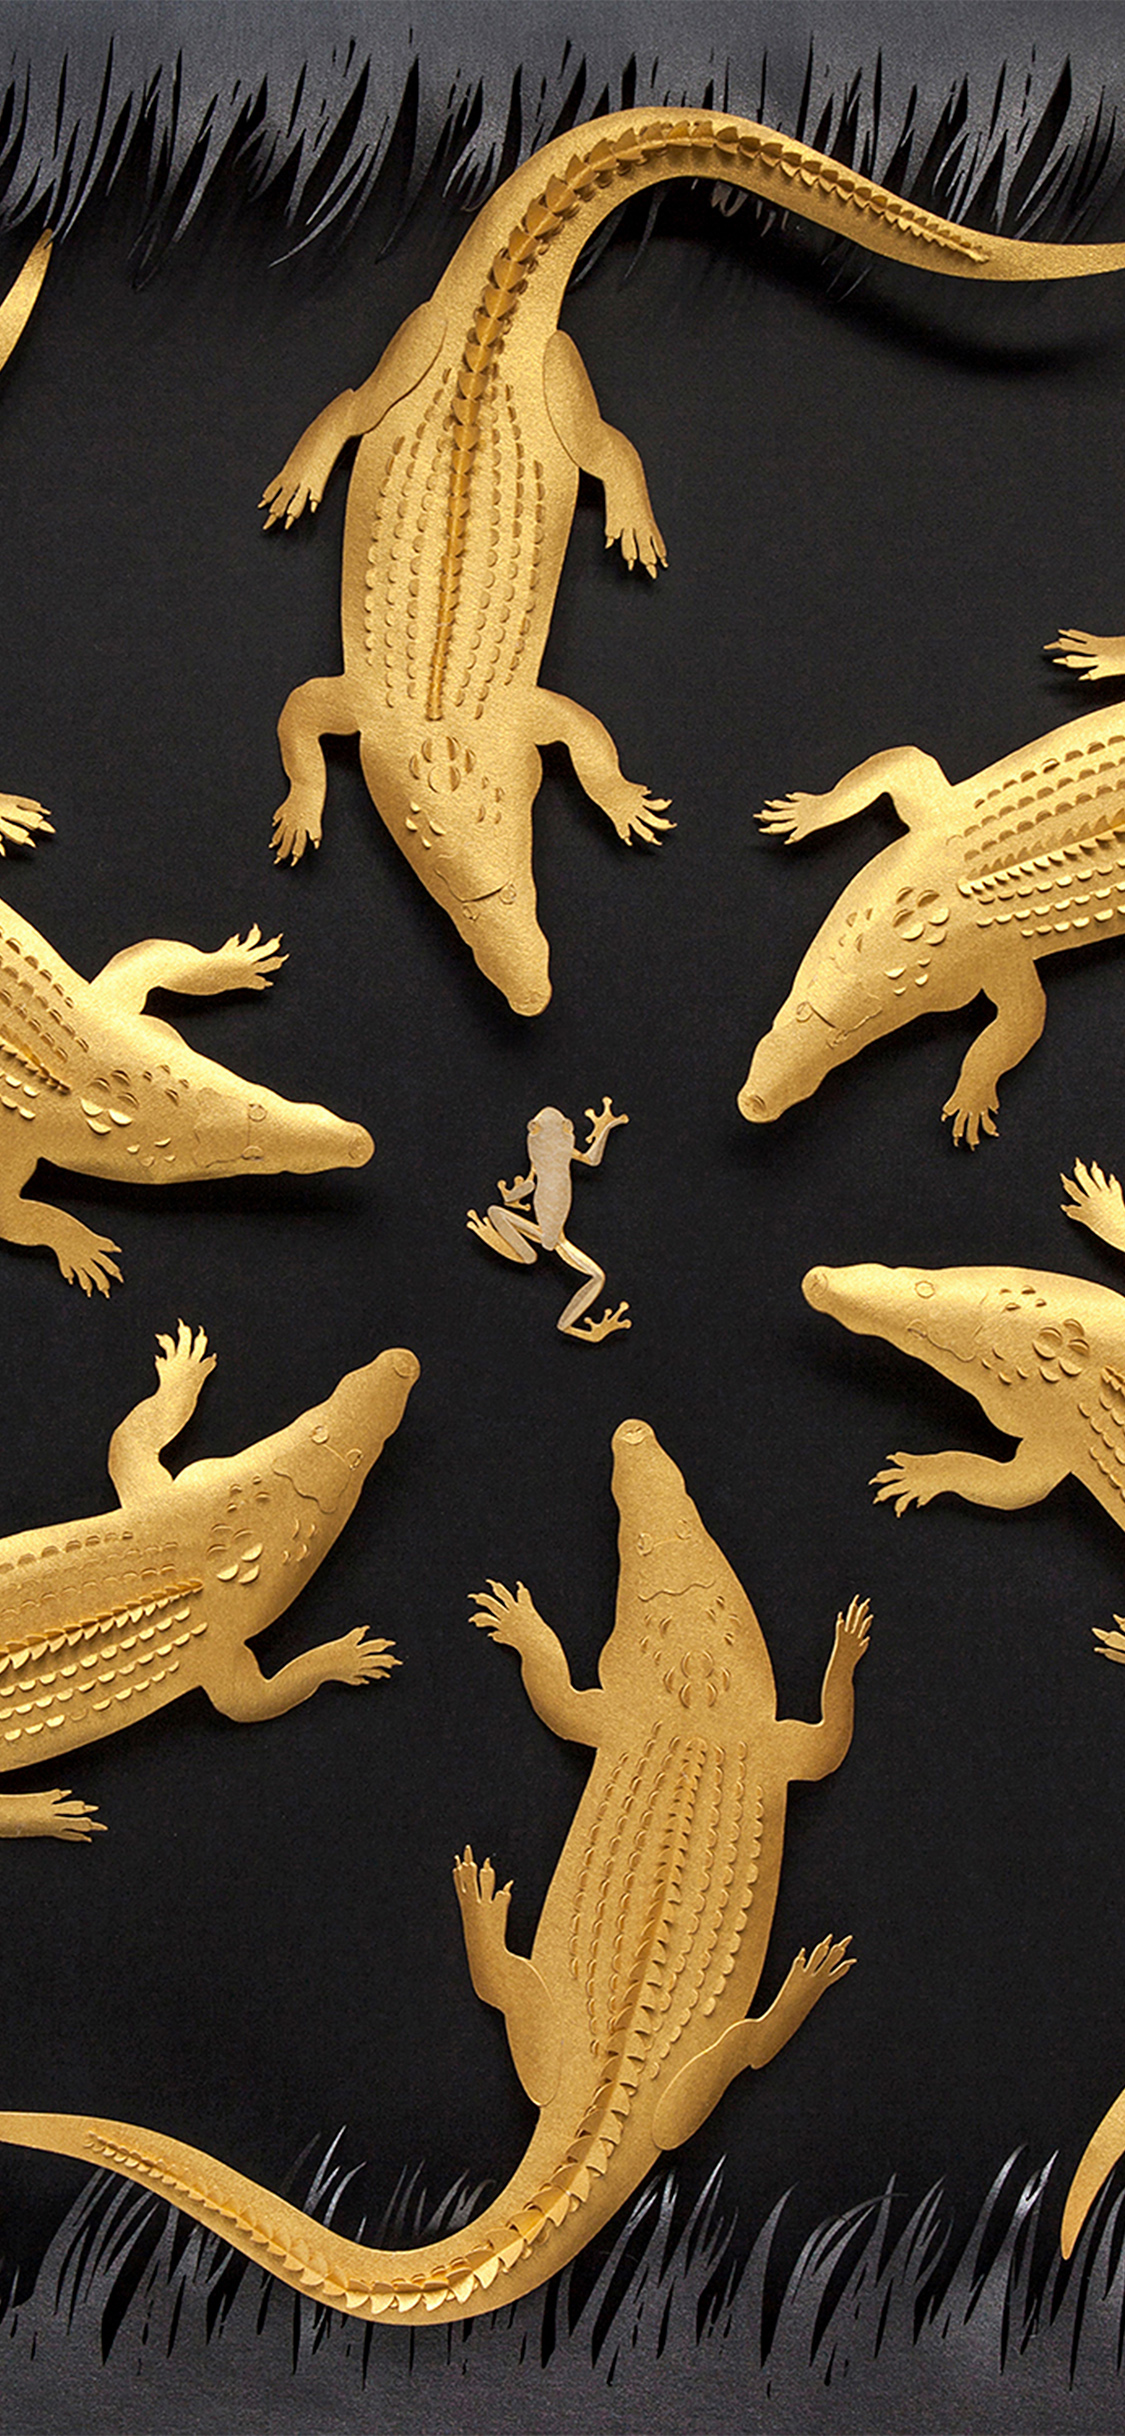 iPhone wallpaper. gold alligator frog